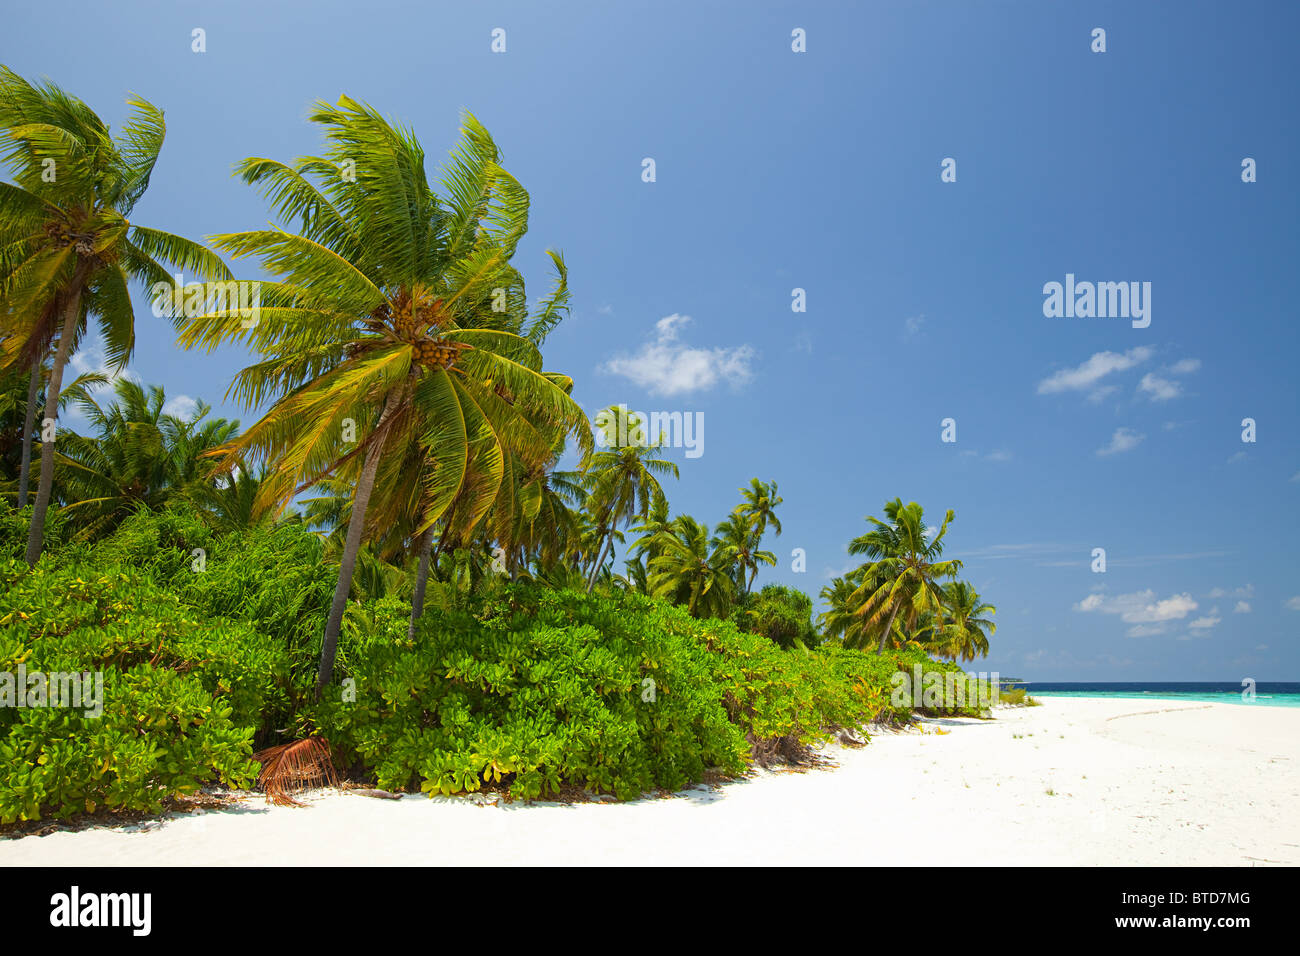 Baughagello Island, South Huvadu Atoll, Maldives Stock Photo - Alamy